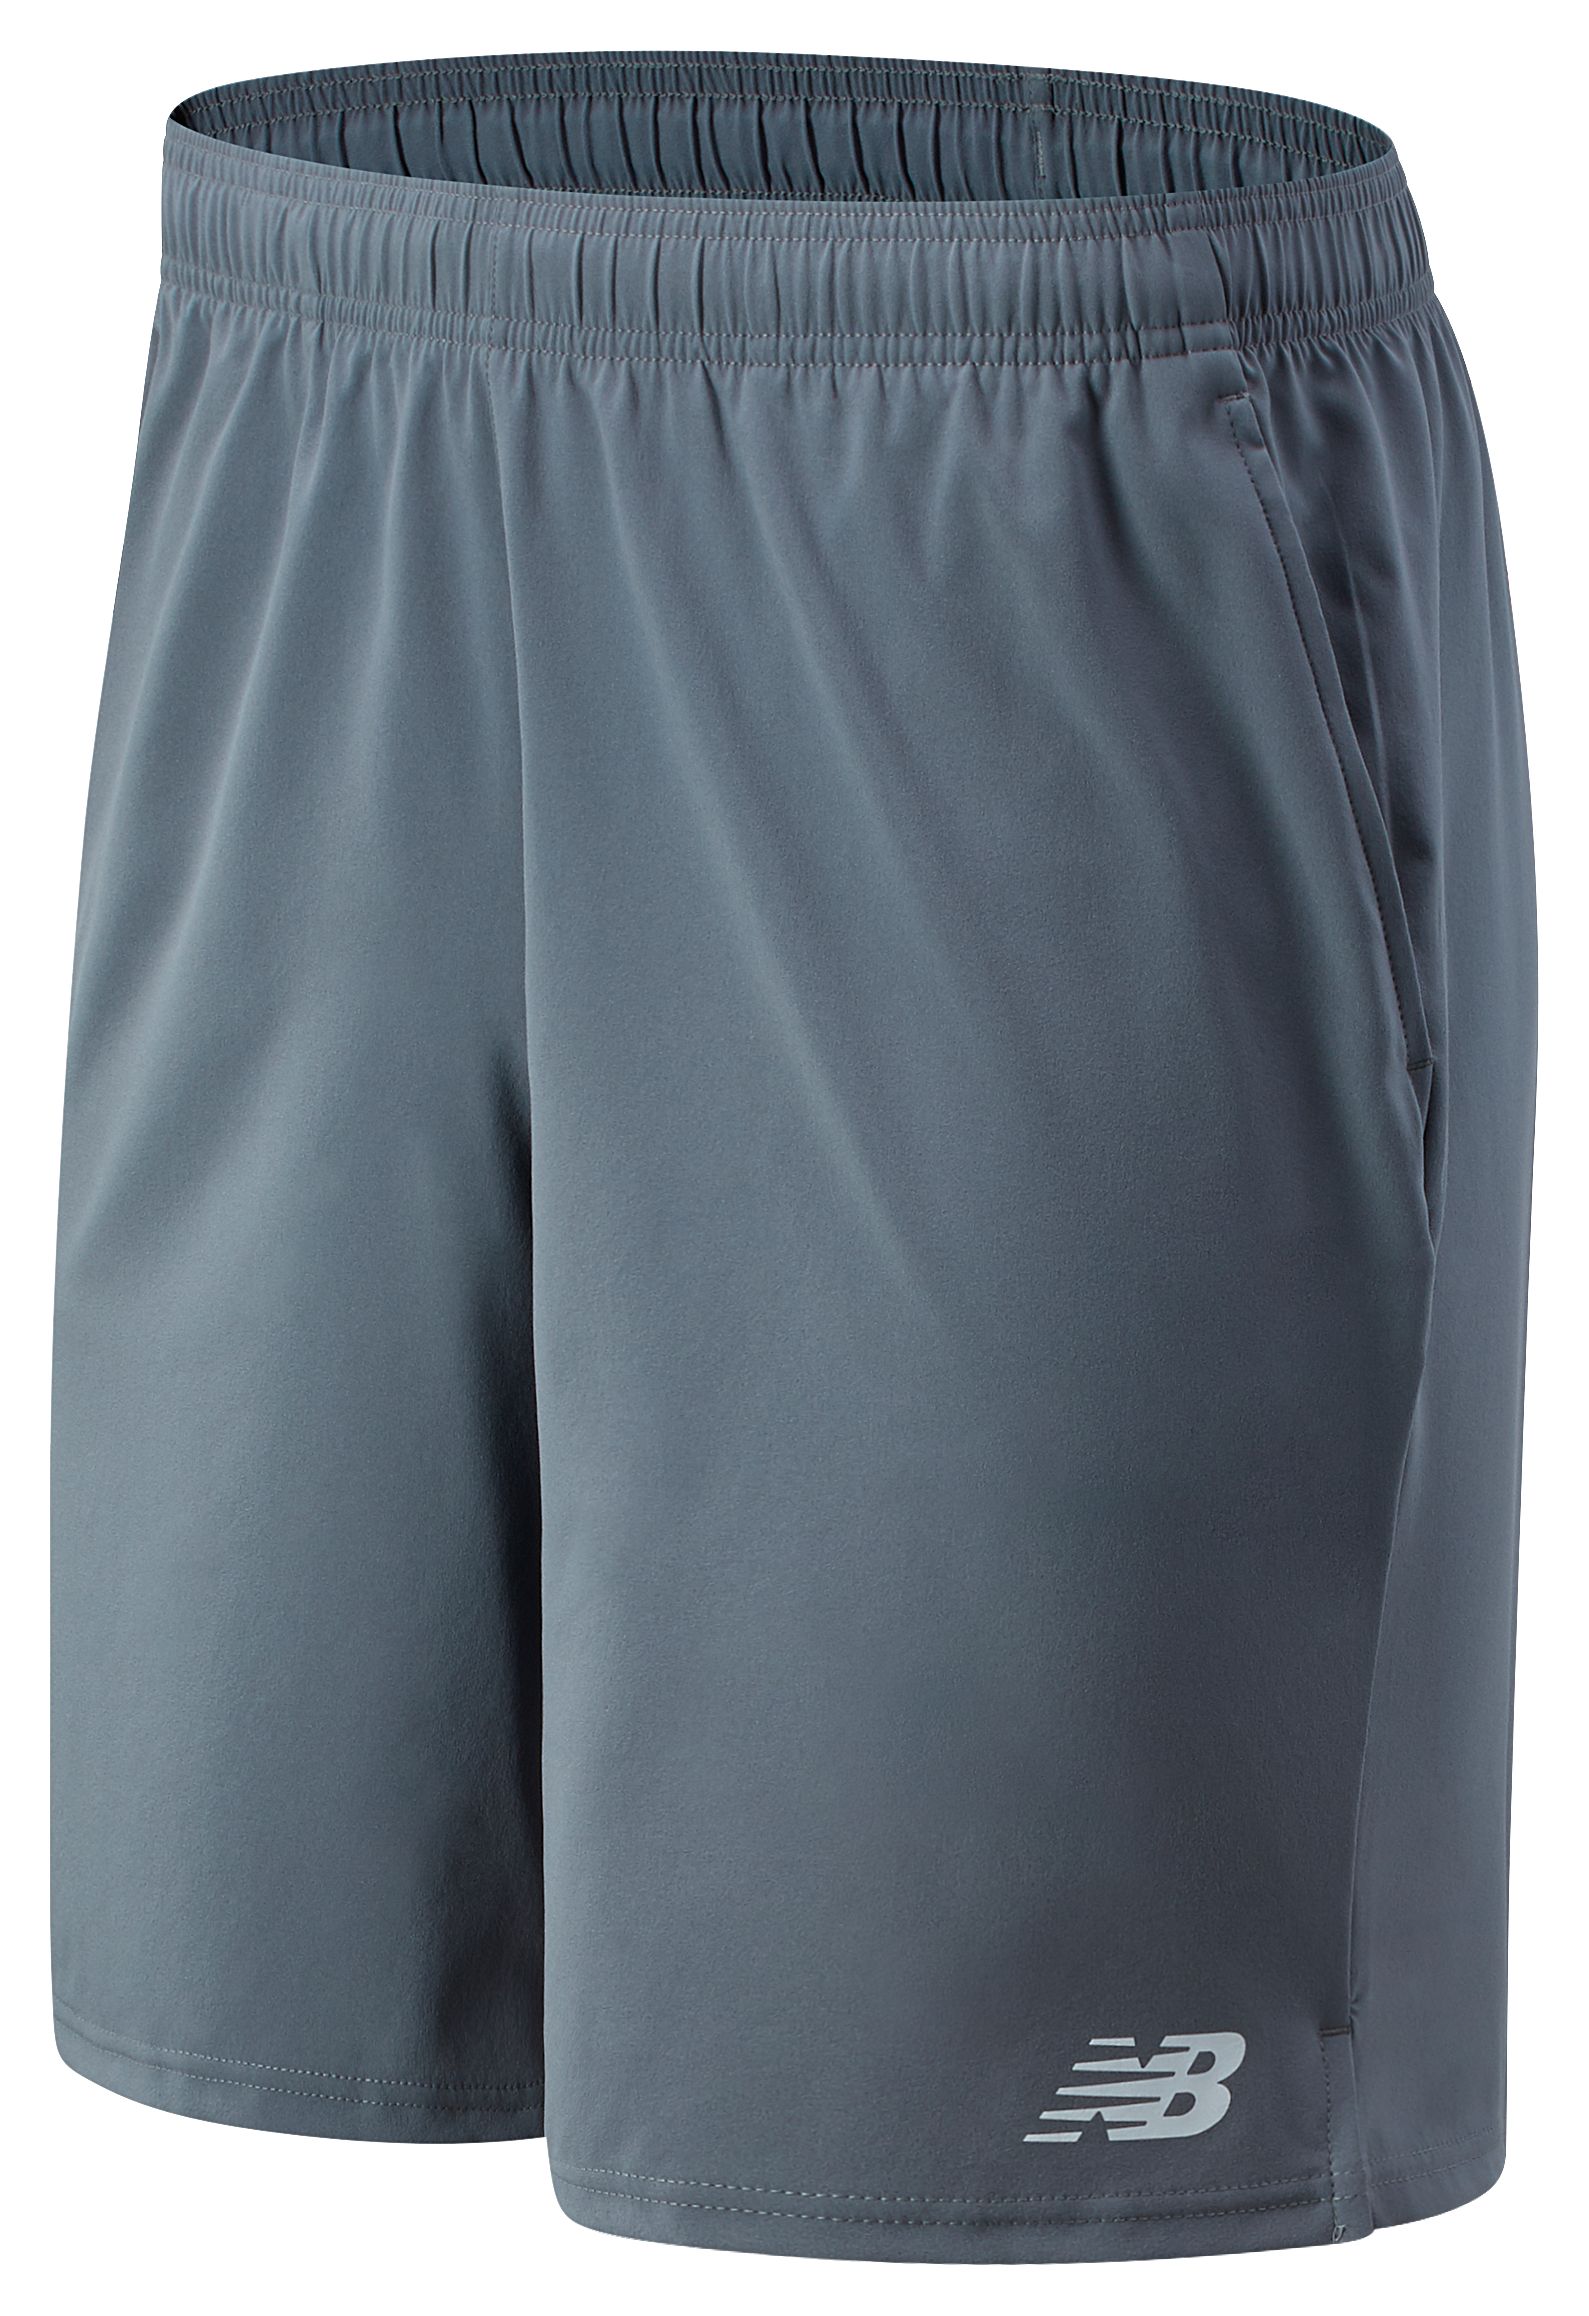 men's new balance shorts